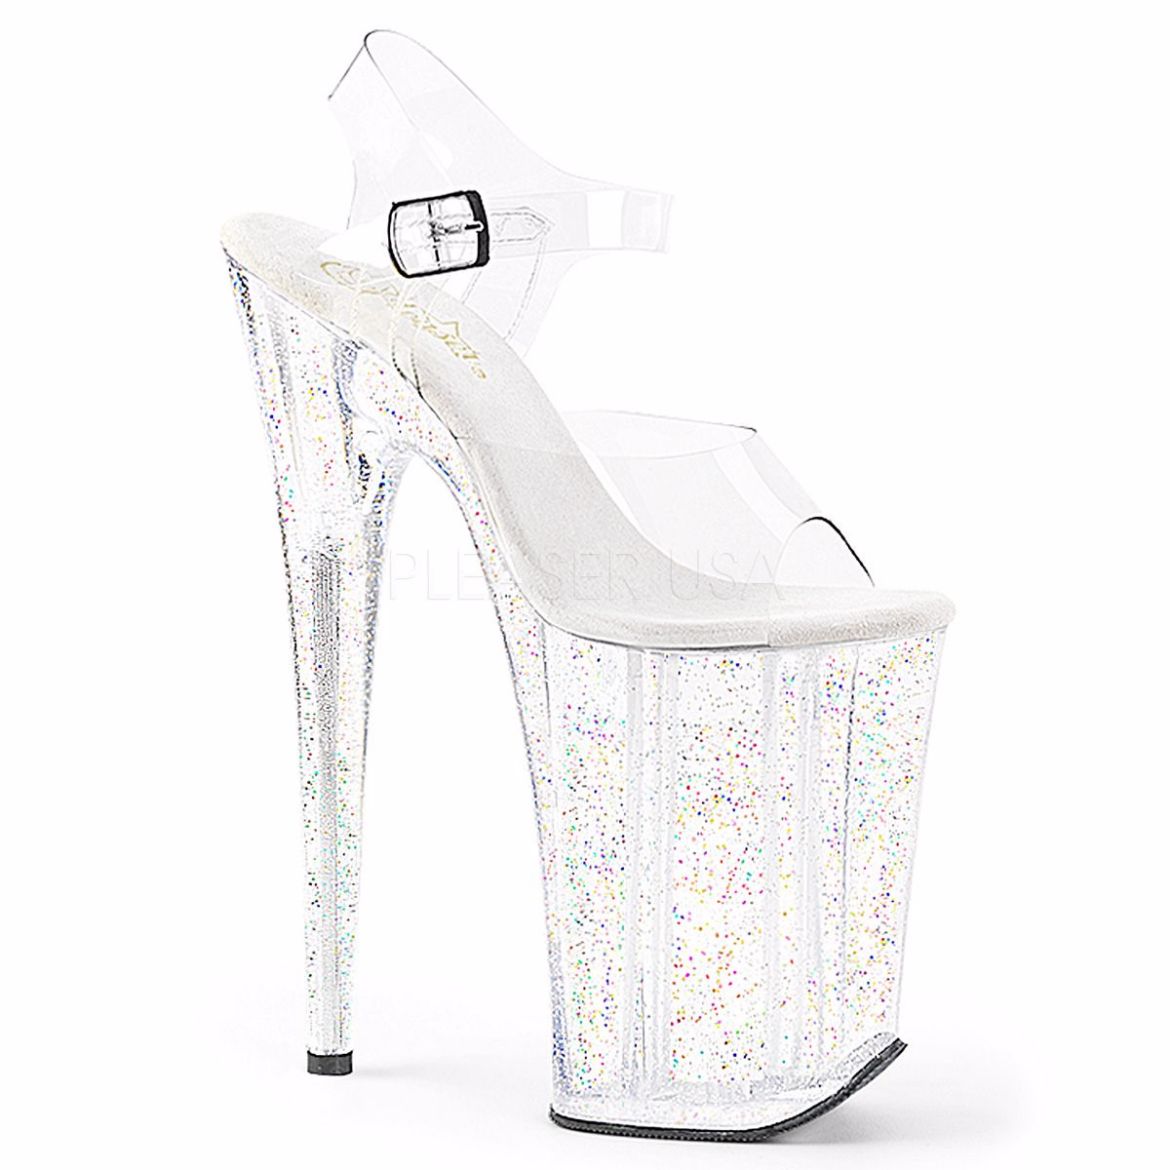 20cm/8-inch steel pipe dance shoes party platform women's sandals high heels  | eBay